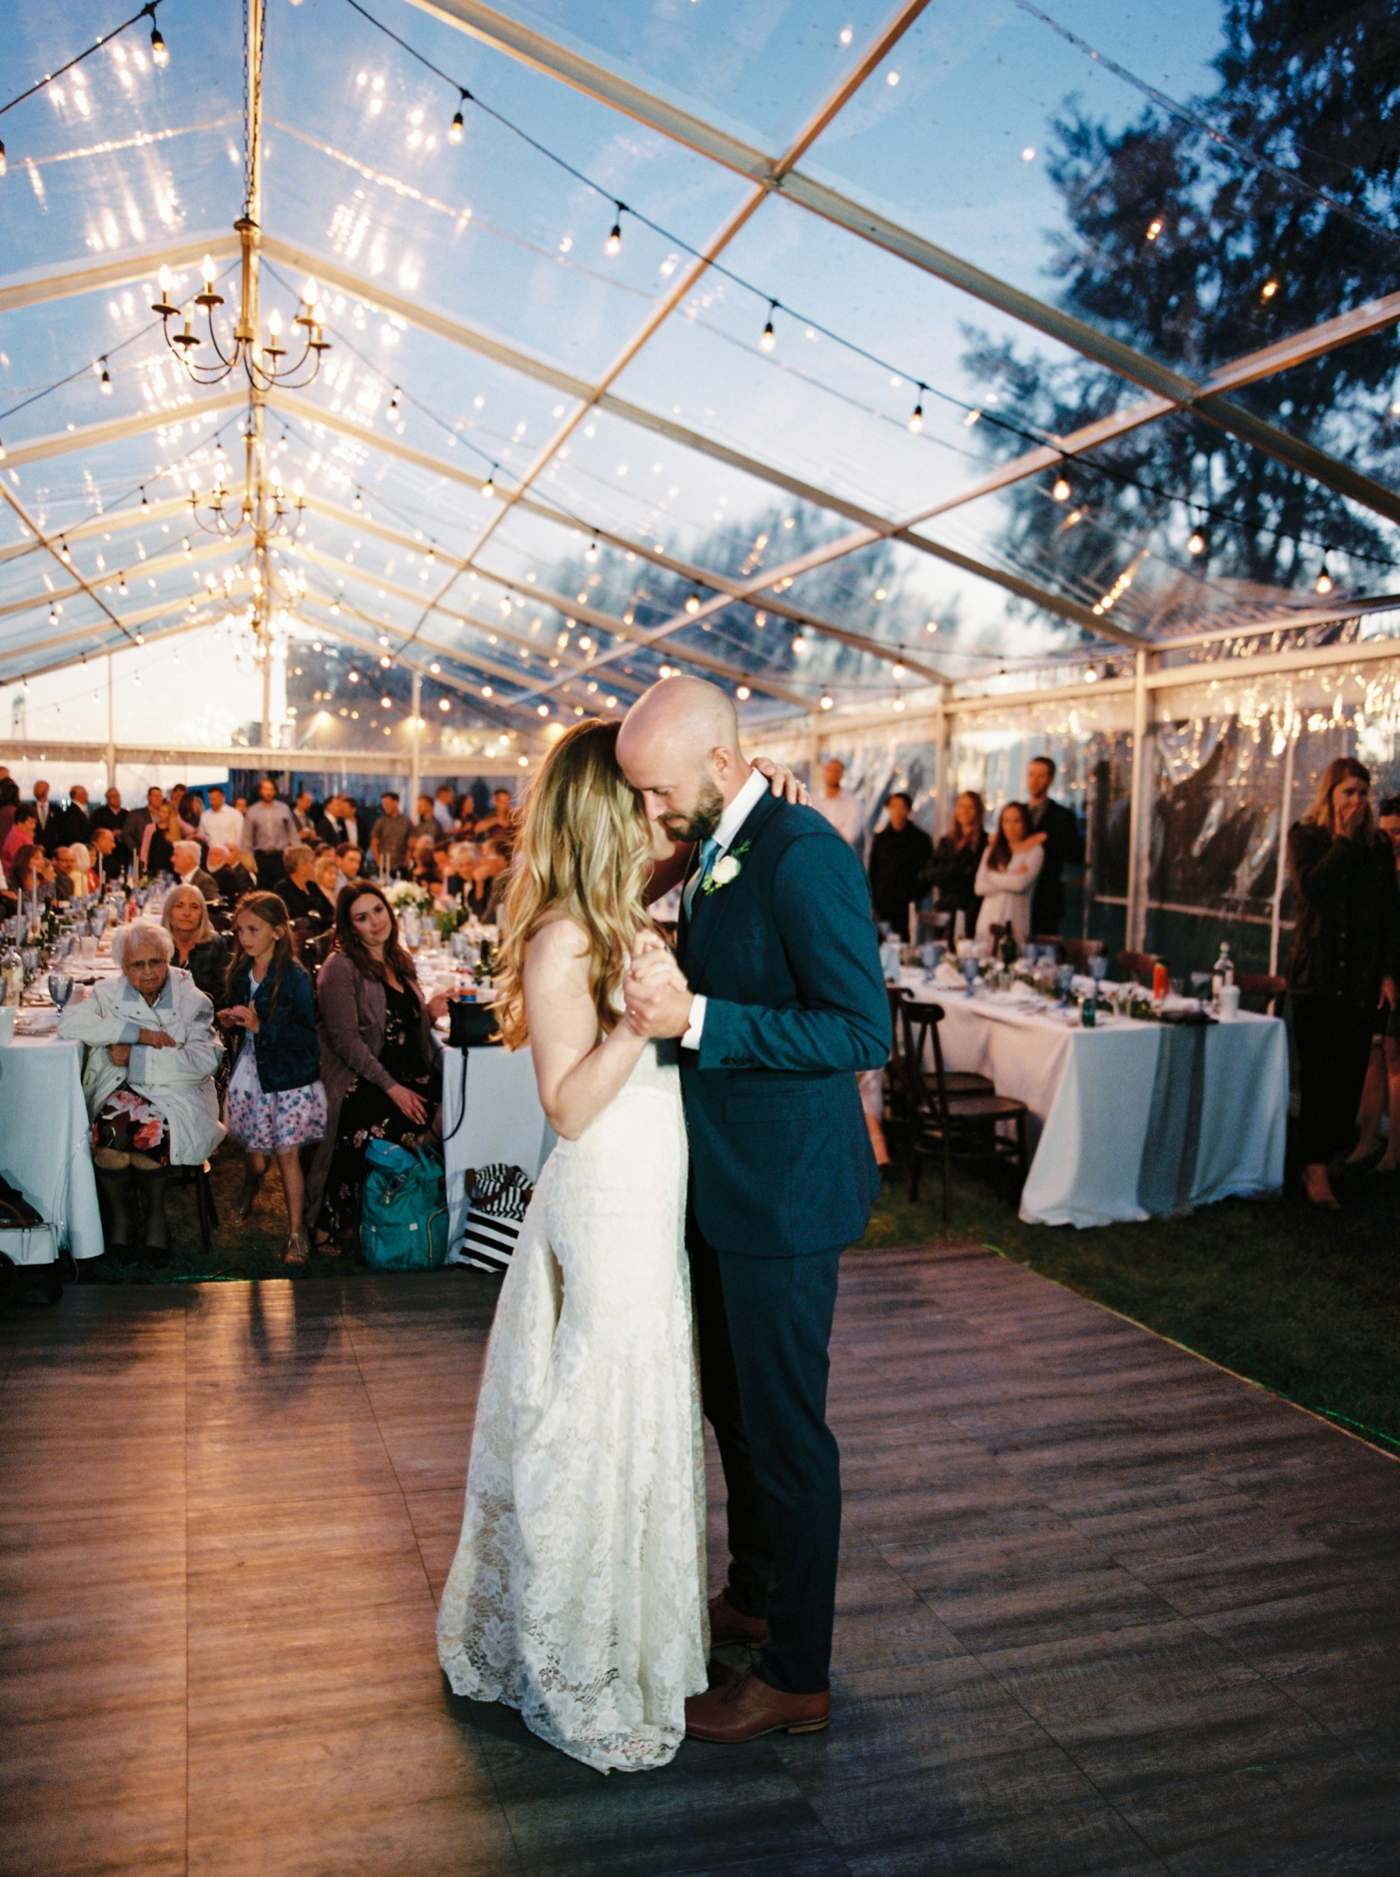 Calgary wedding photographers | The Gathered Farm Wedding | Justine milton fine art film photographer | clear tent wedding reception first dances